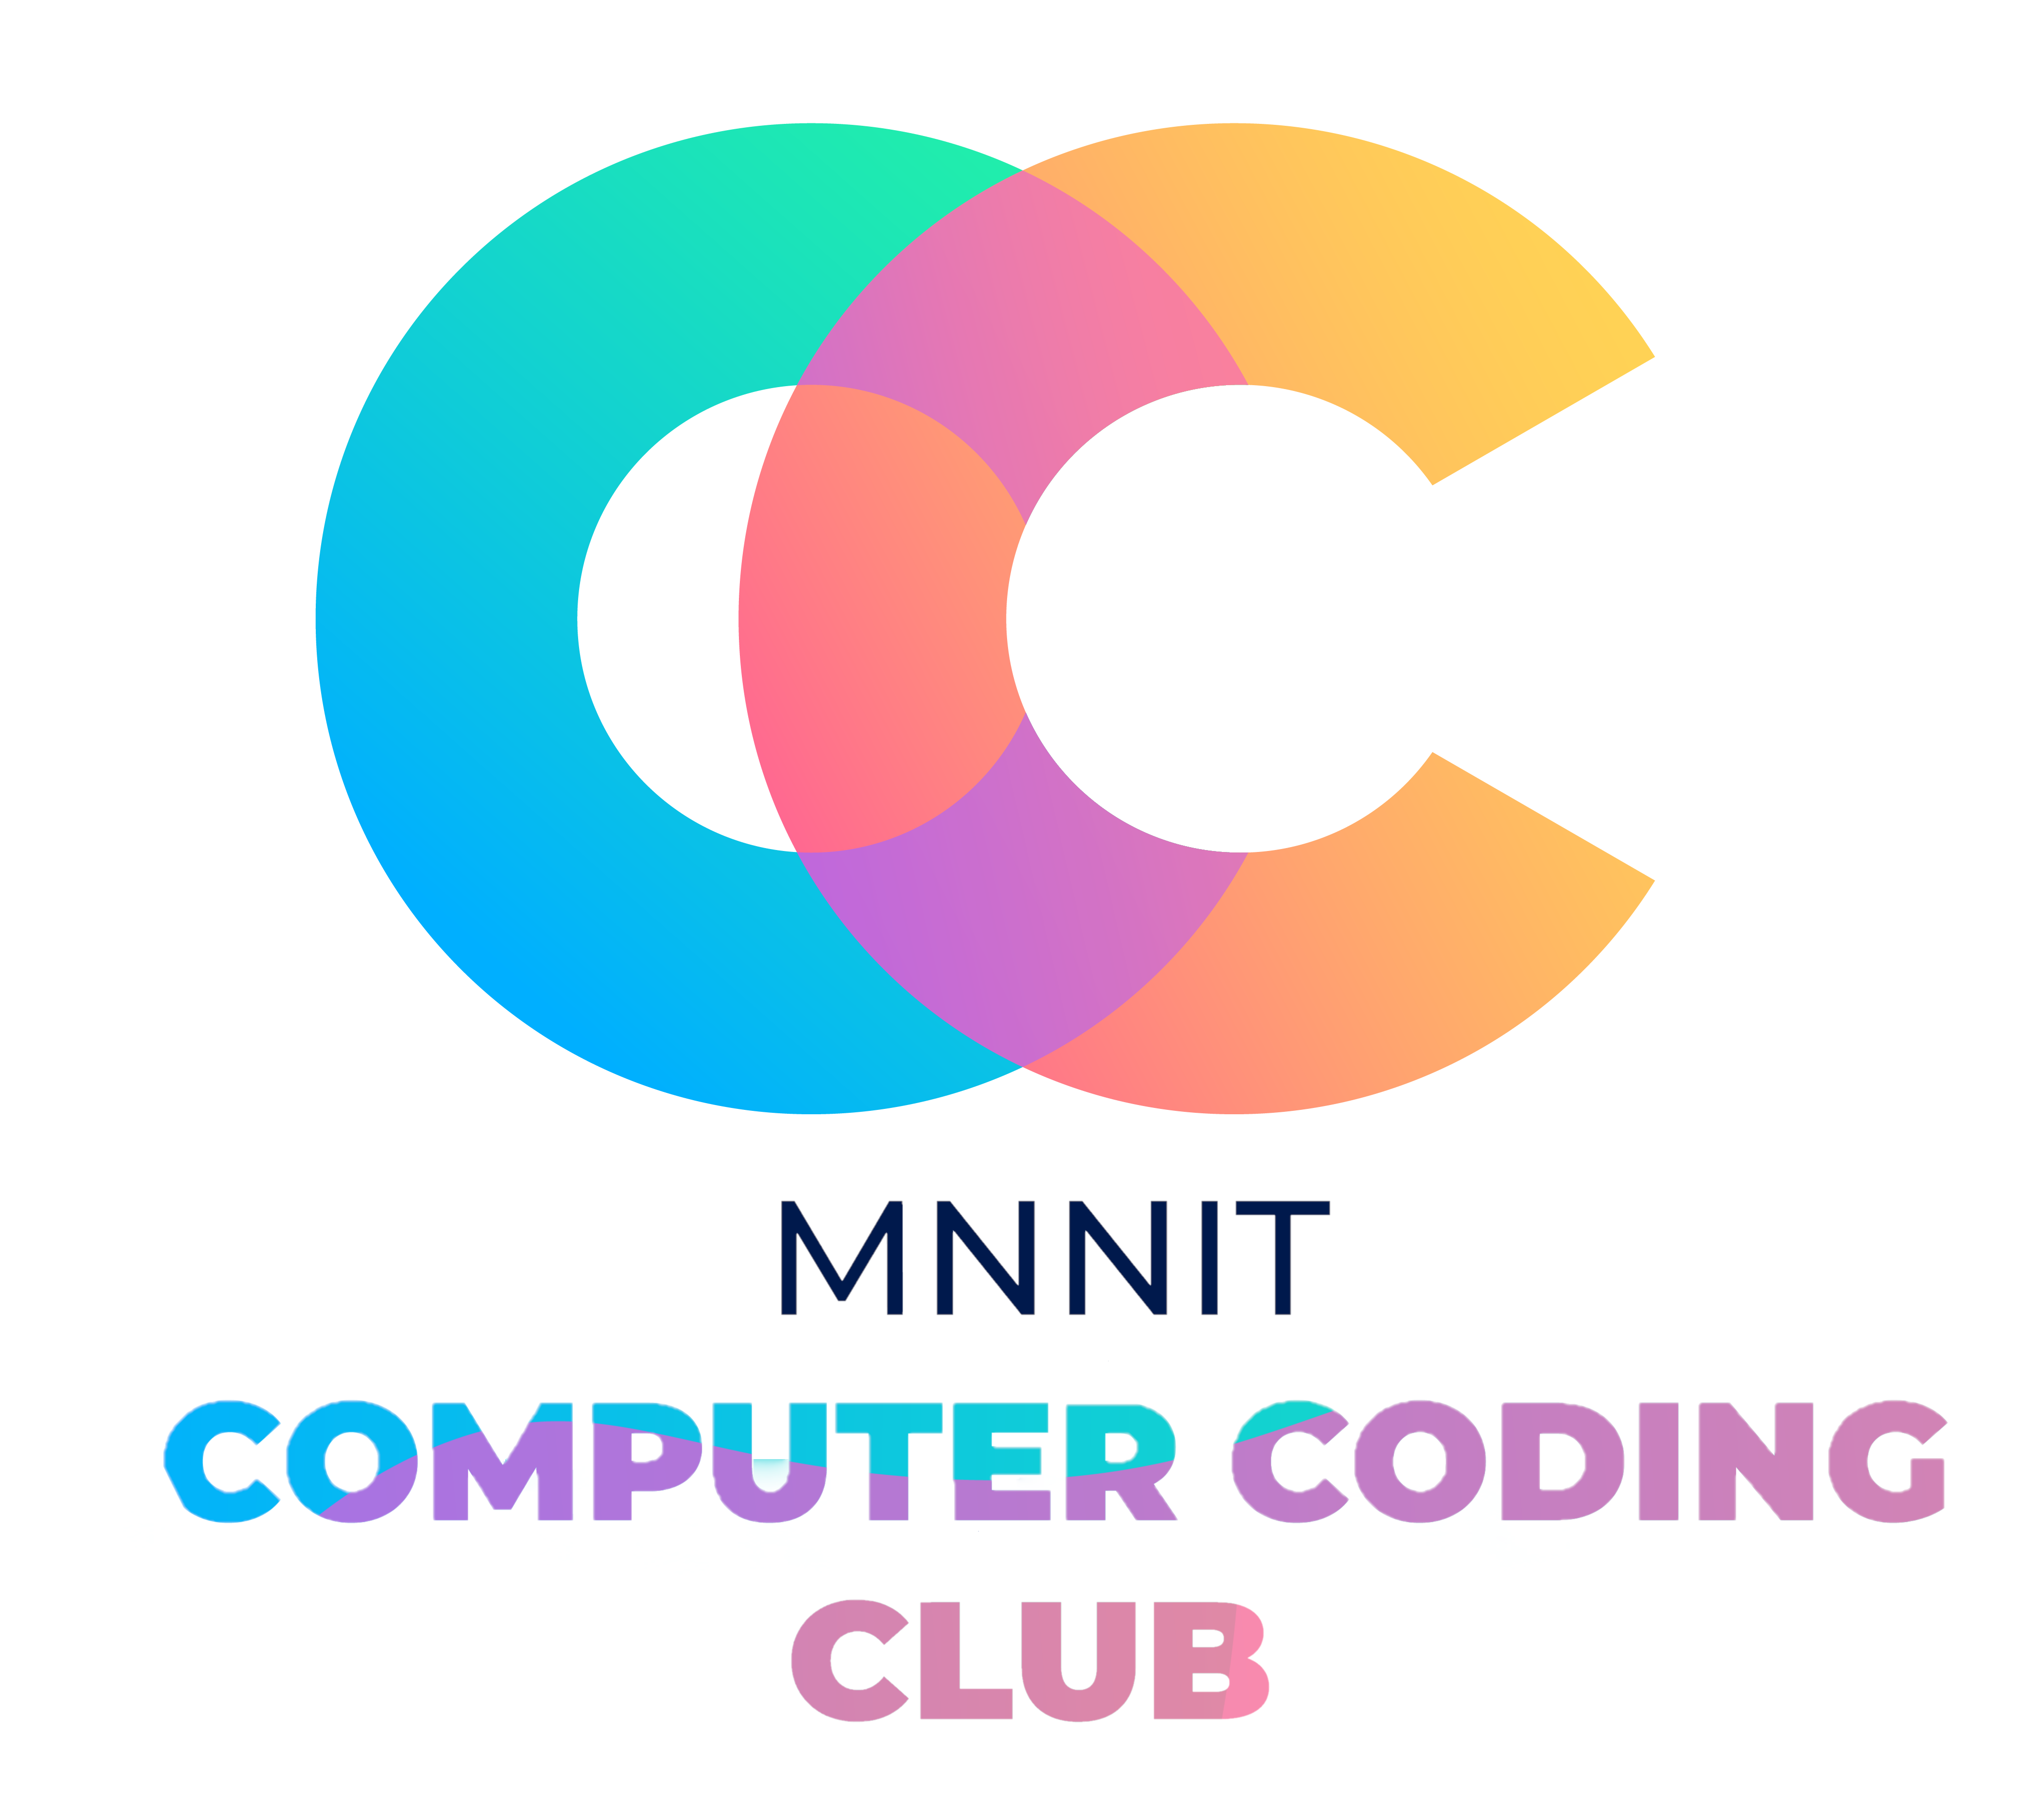 MNNIT Computer Coding Club logo